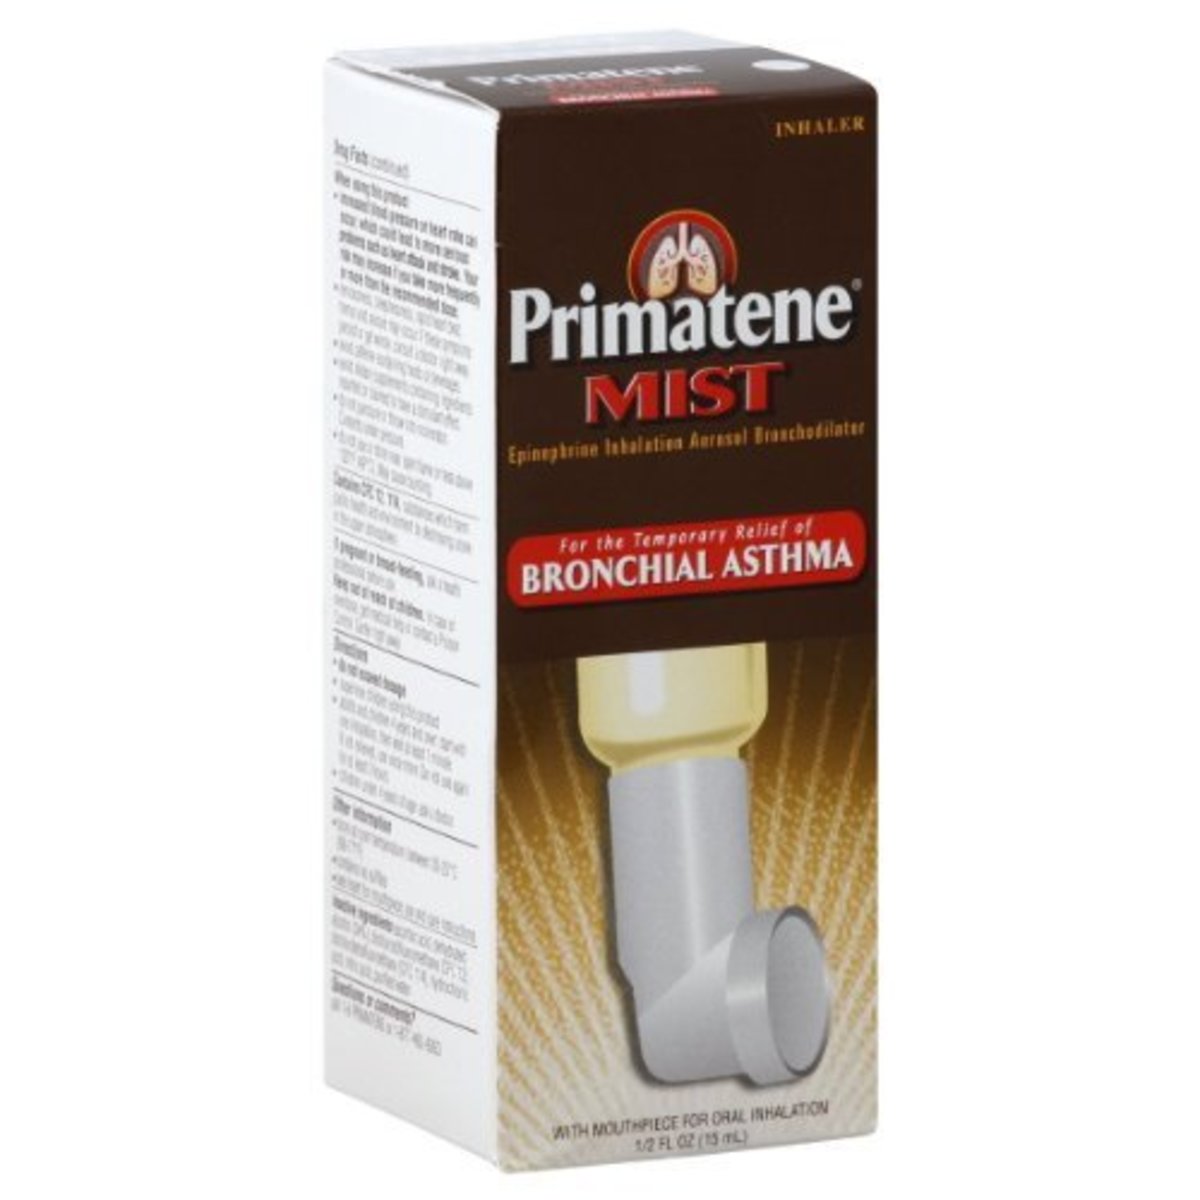 Primatene Mist was taken off the market on December 21, 2011.